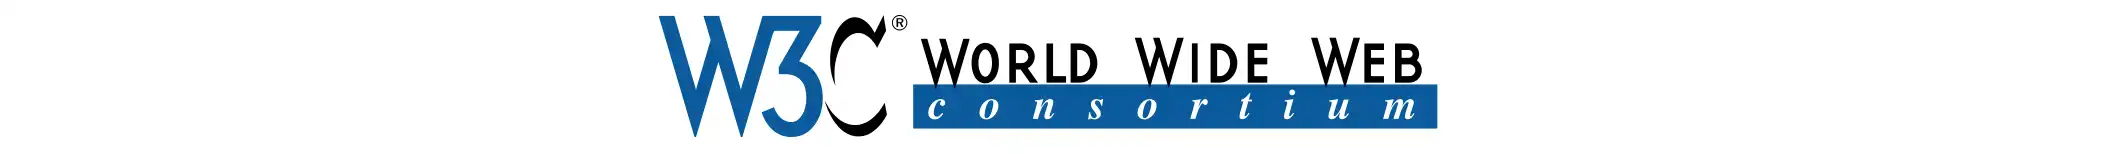 World Wide Web Consortium - W3C